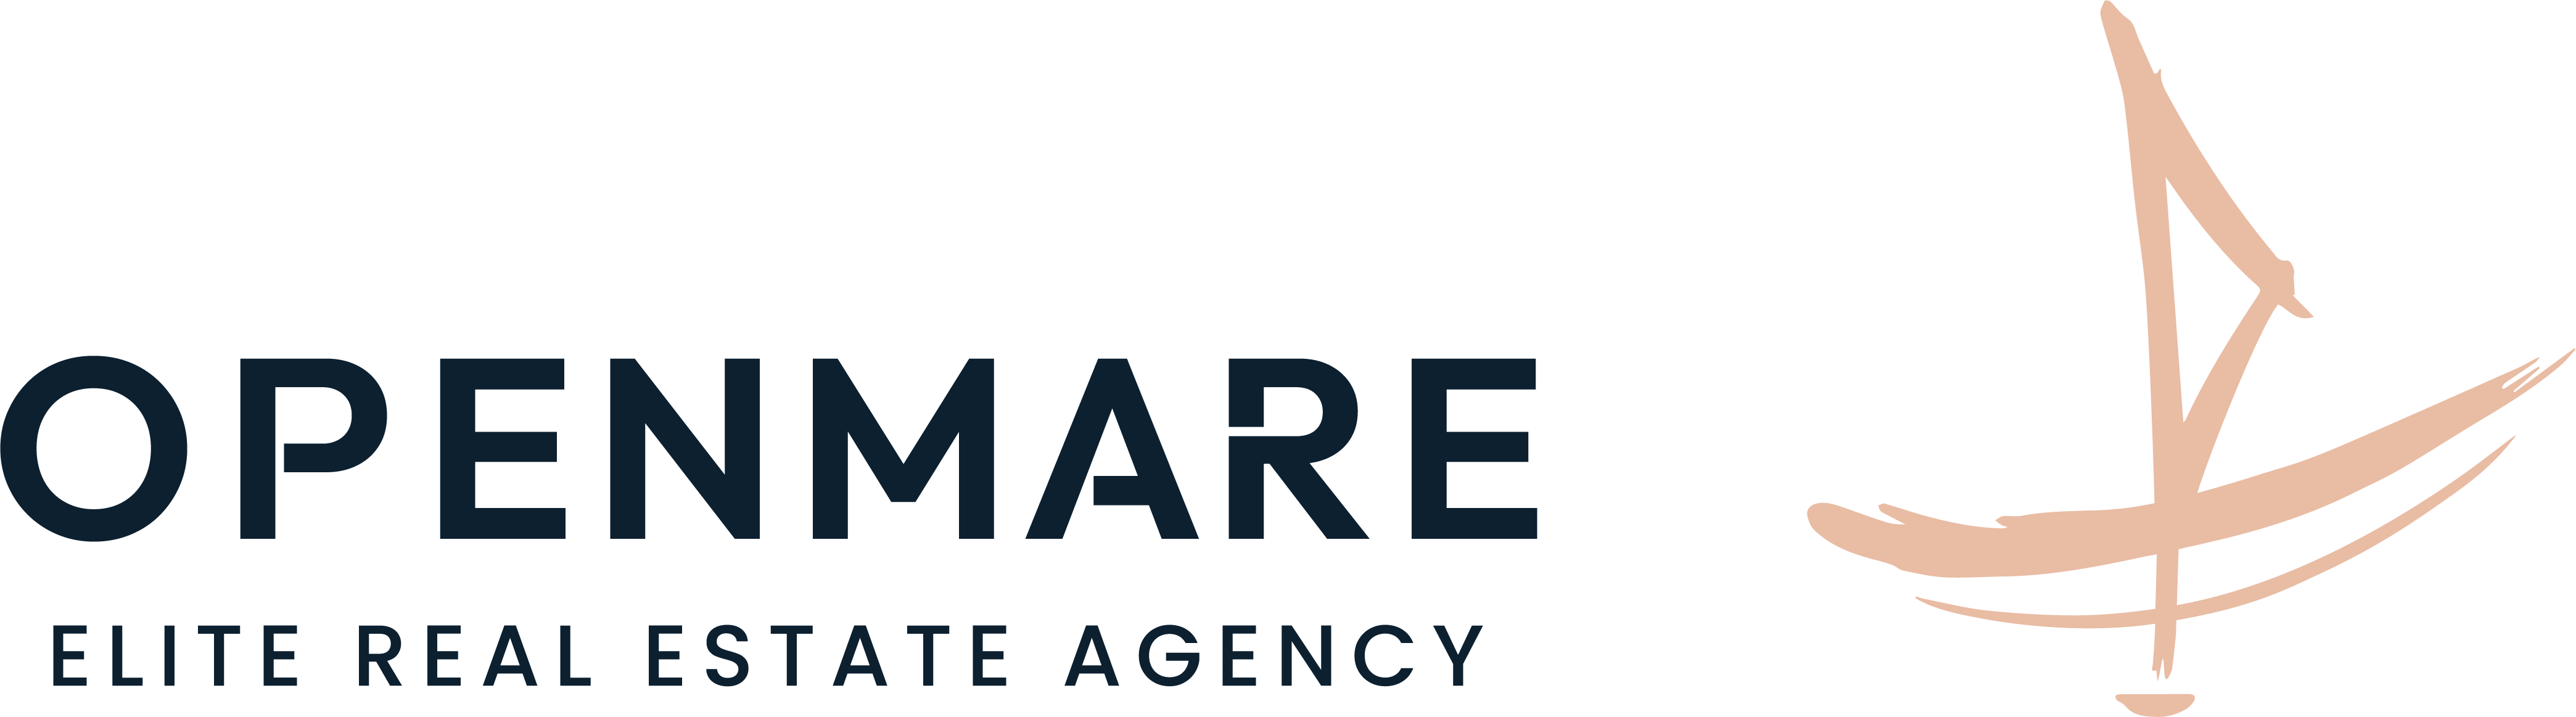 Blog da Openmare Real Estate Agency